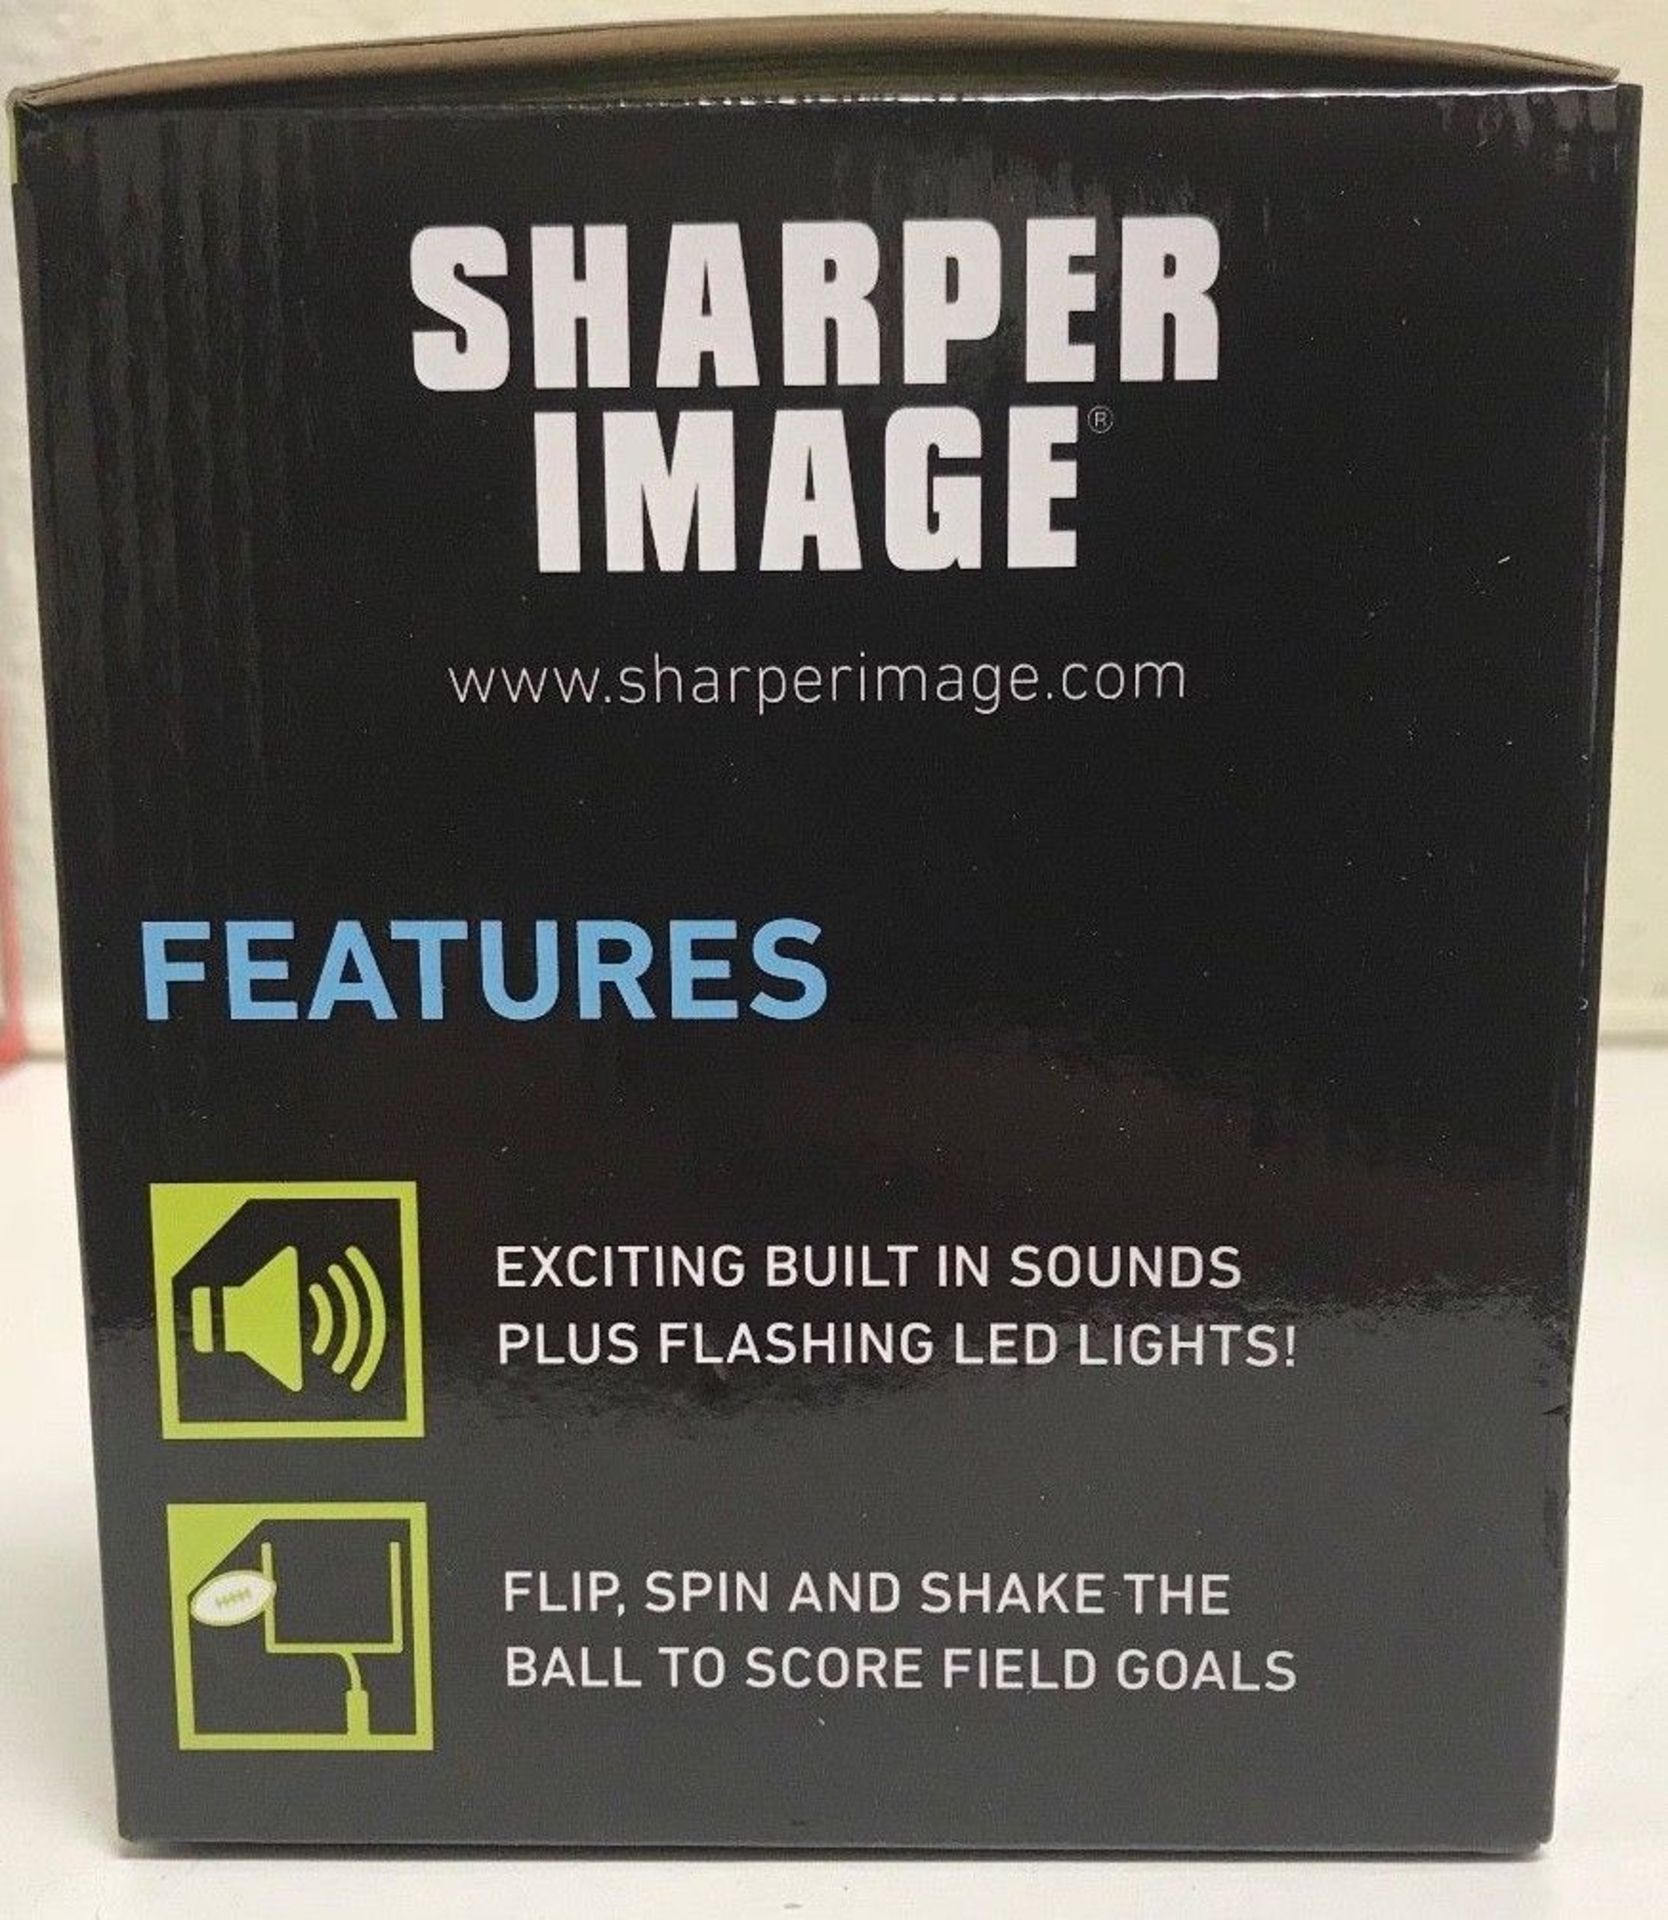 LOT OF 10 NEW! Sharper Image Electronic Football Game + Built in Speaker!!! - Image 2 of 2